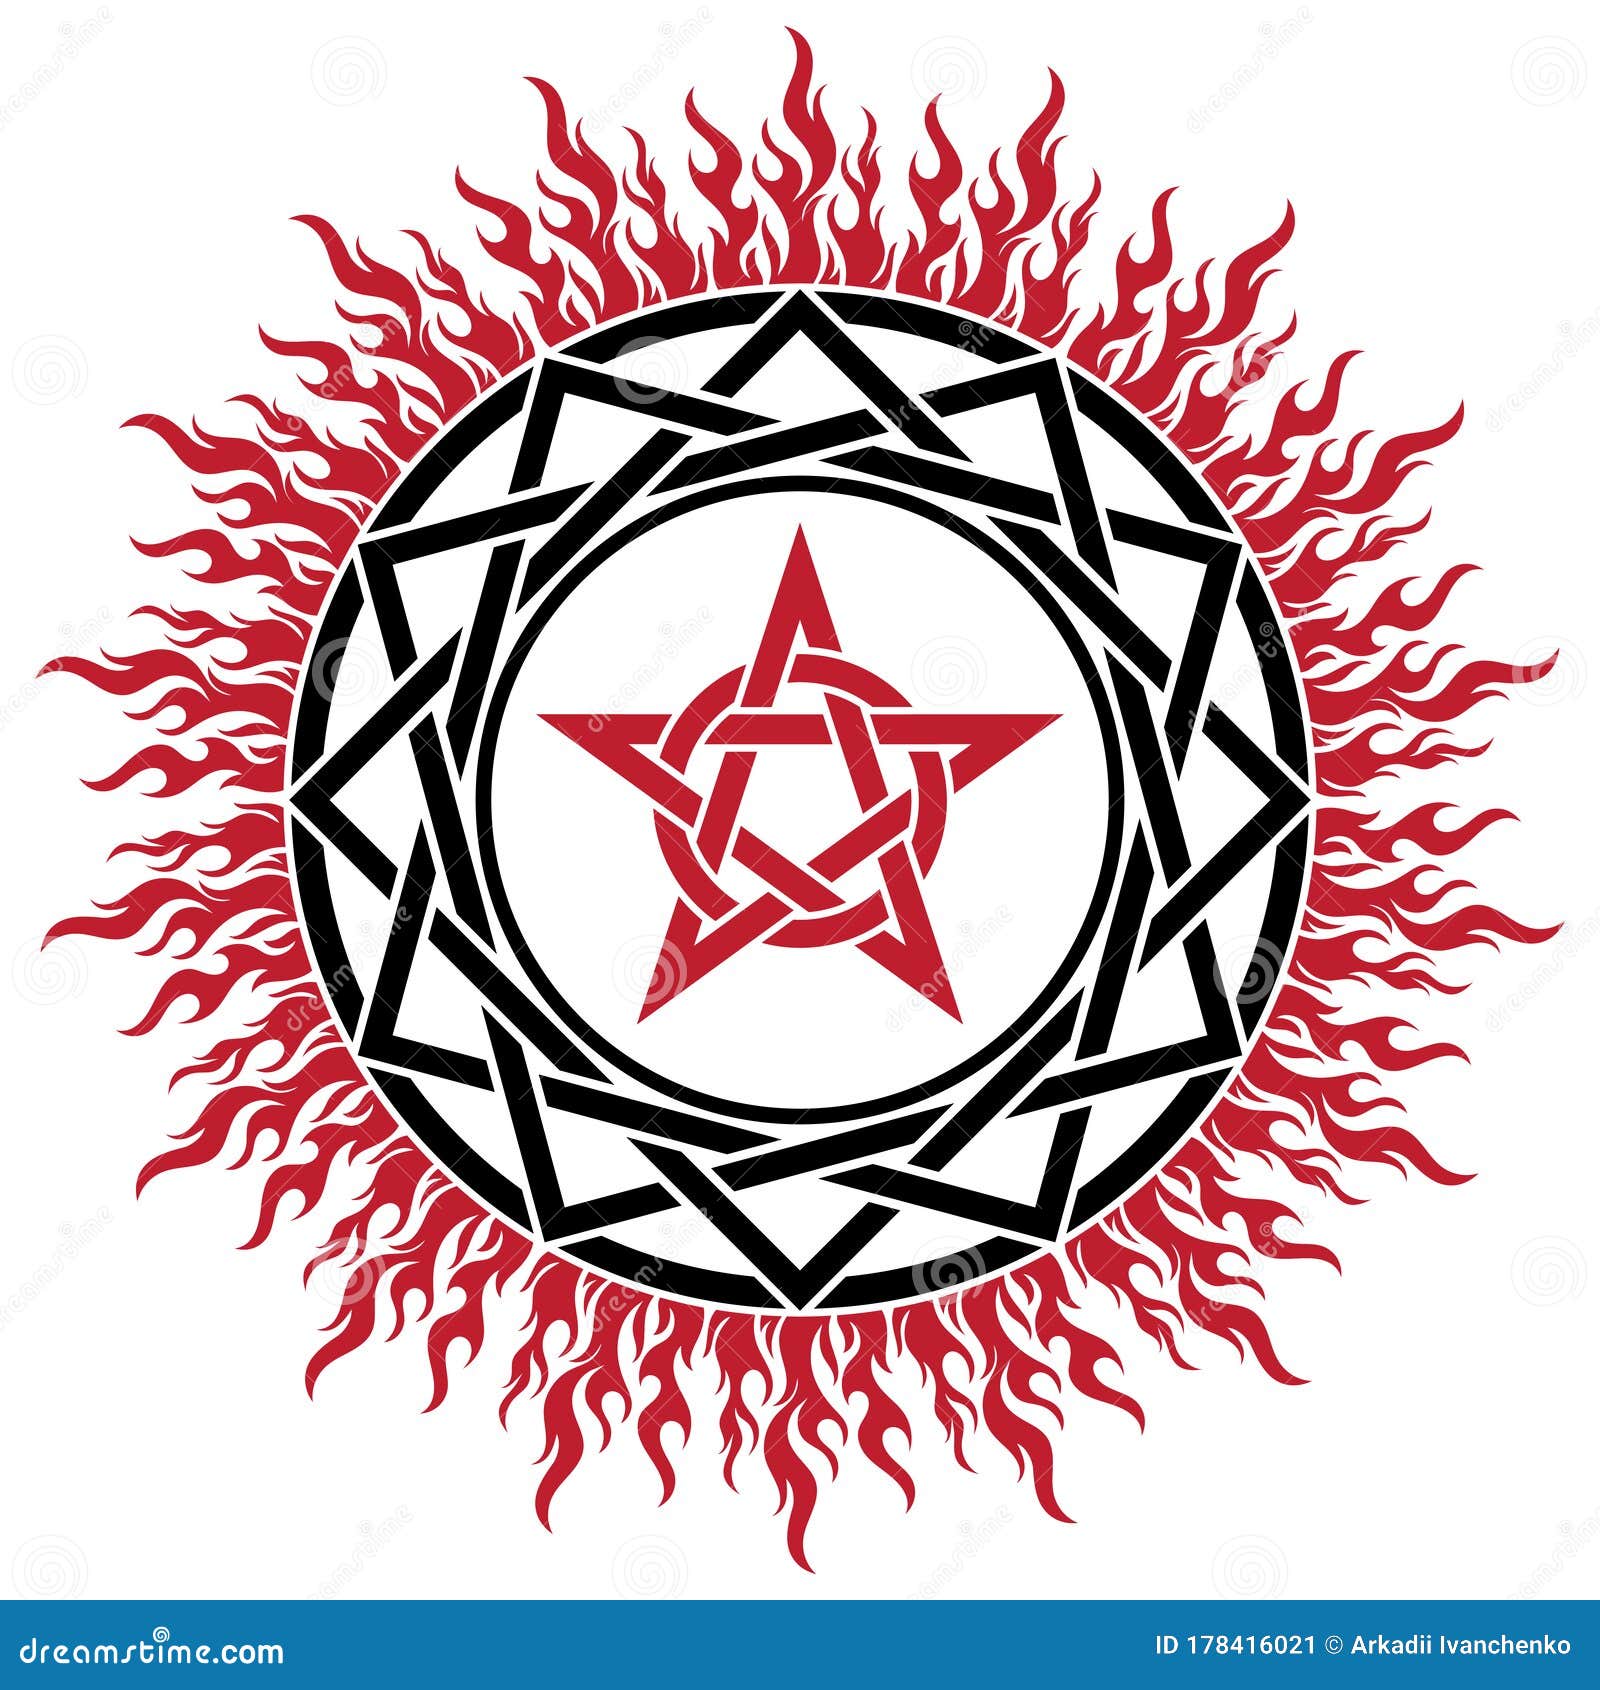 Black Magic Sign, Pentagram and Fire Stock Vector - Illustration of demon,  antichrist: 178416021